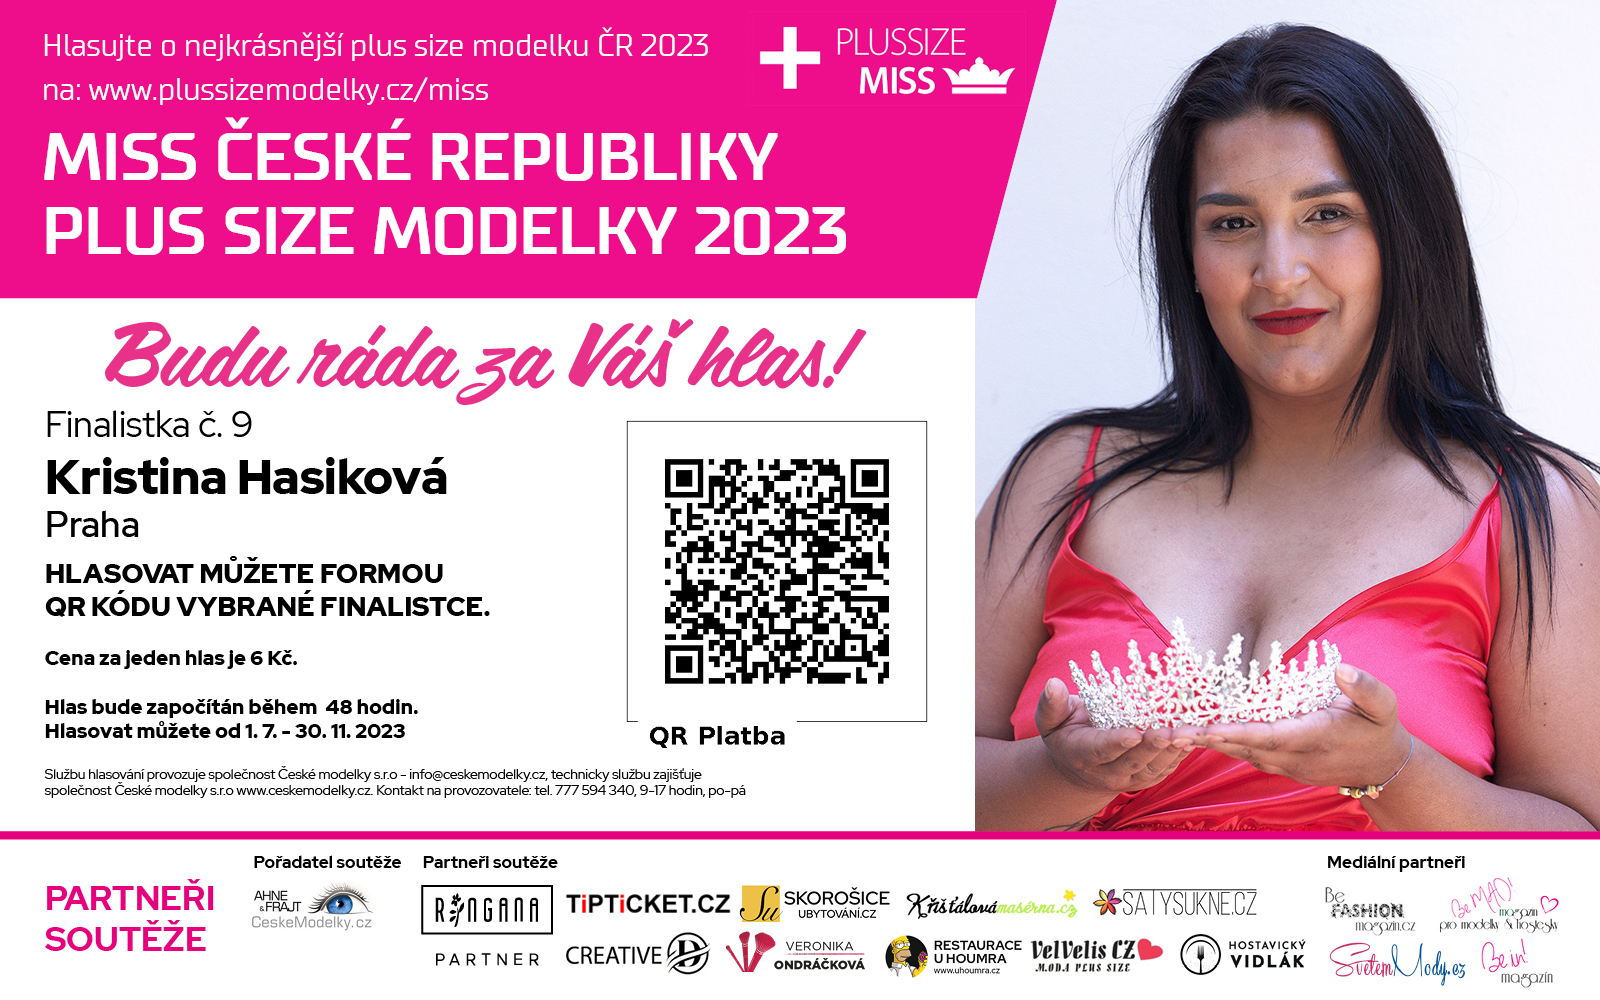 Kristina Hasikova finalistka .9 soute Miss Plus size modelky R 2023